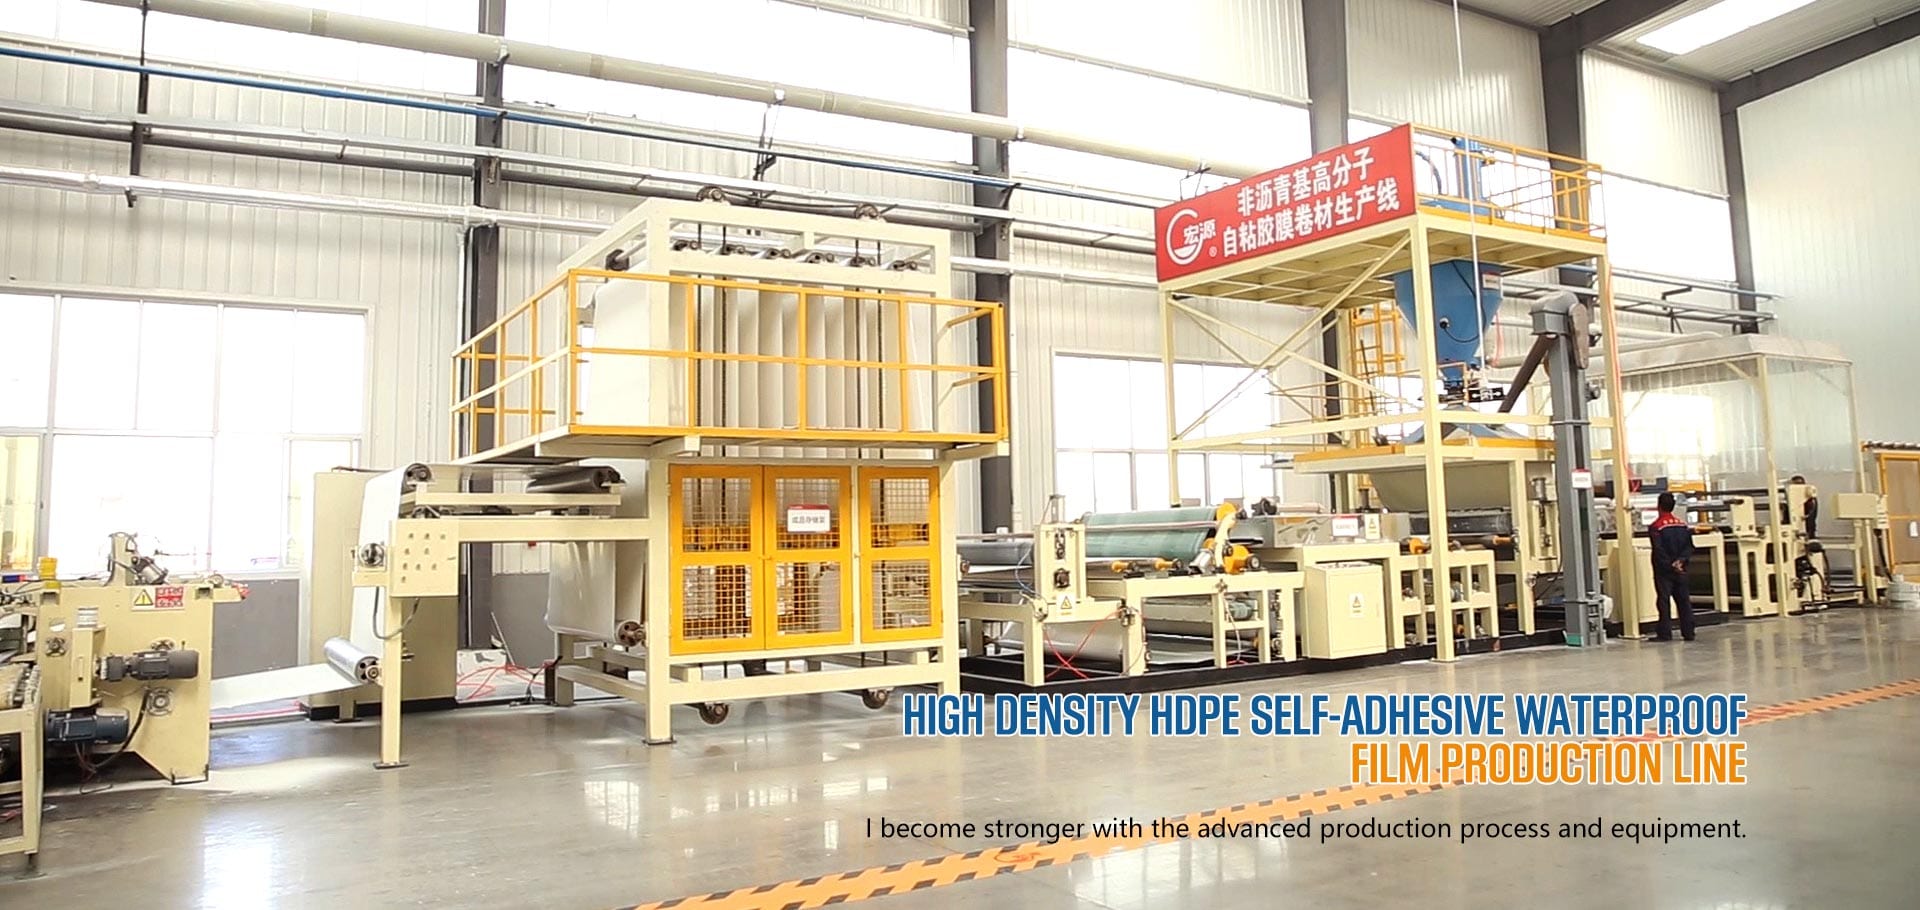 High density HDPE jalur produksi pilem waterproof timer napel